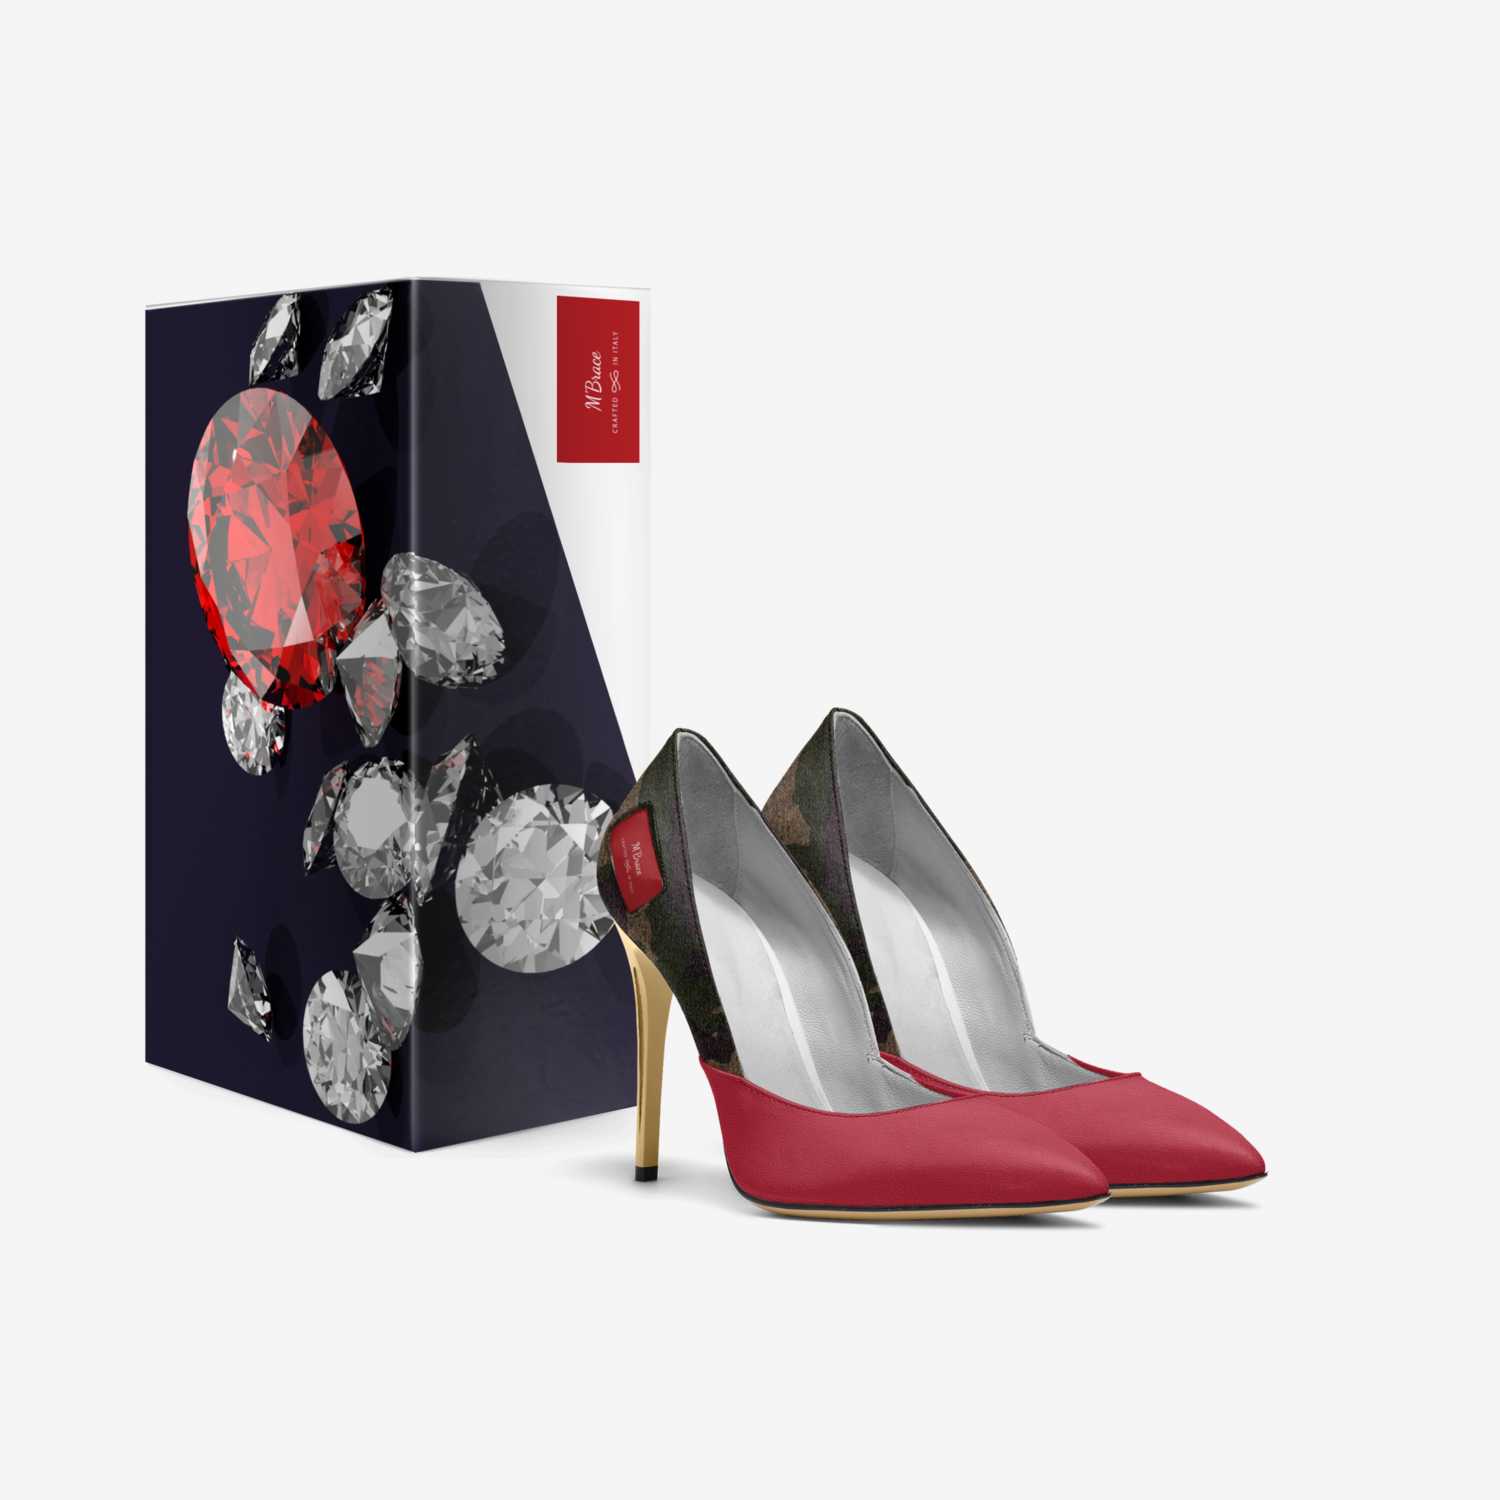 M'Brace custom made in Italy shoes by Regenia Harrell | Box view